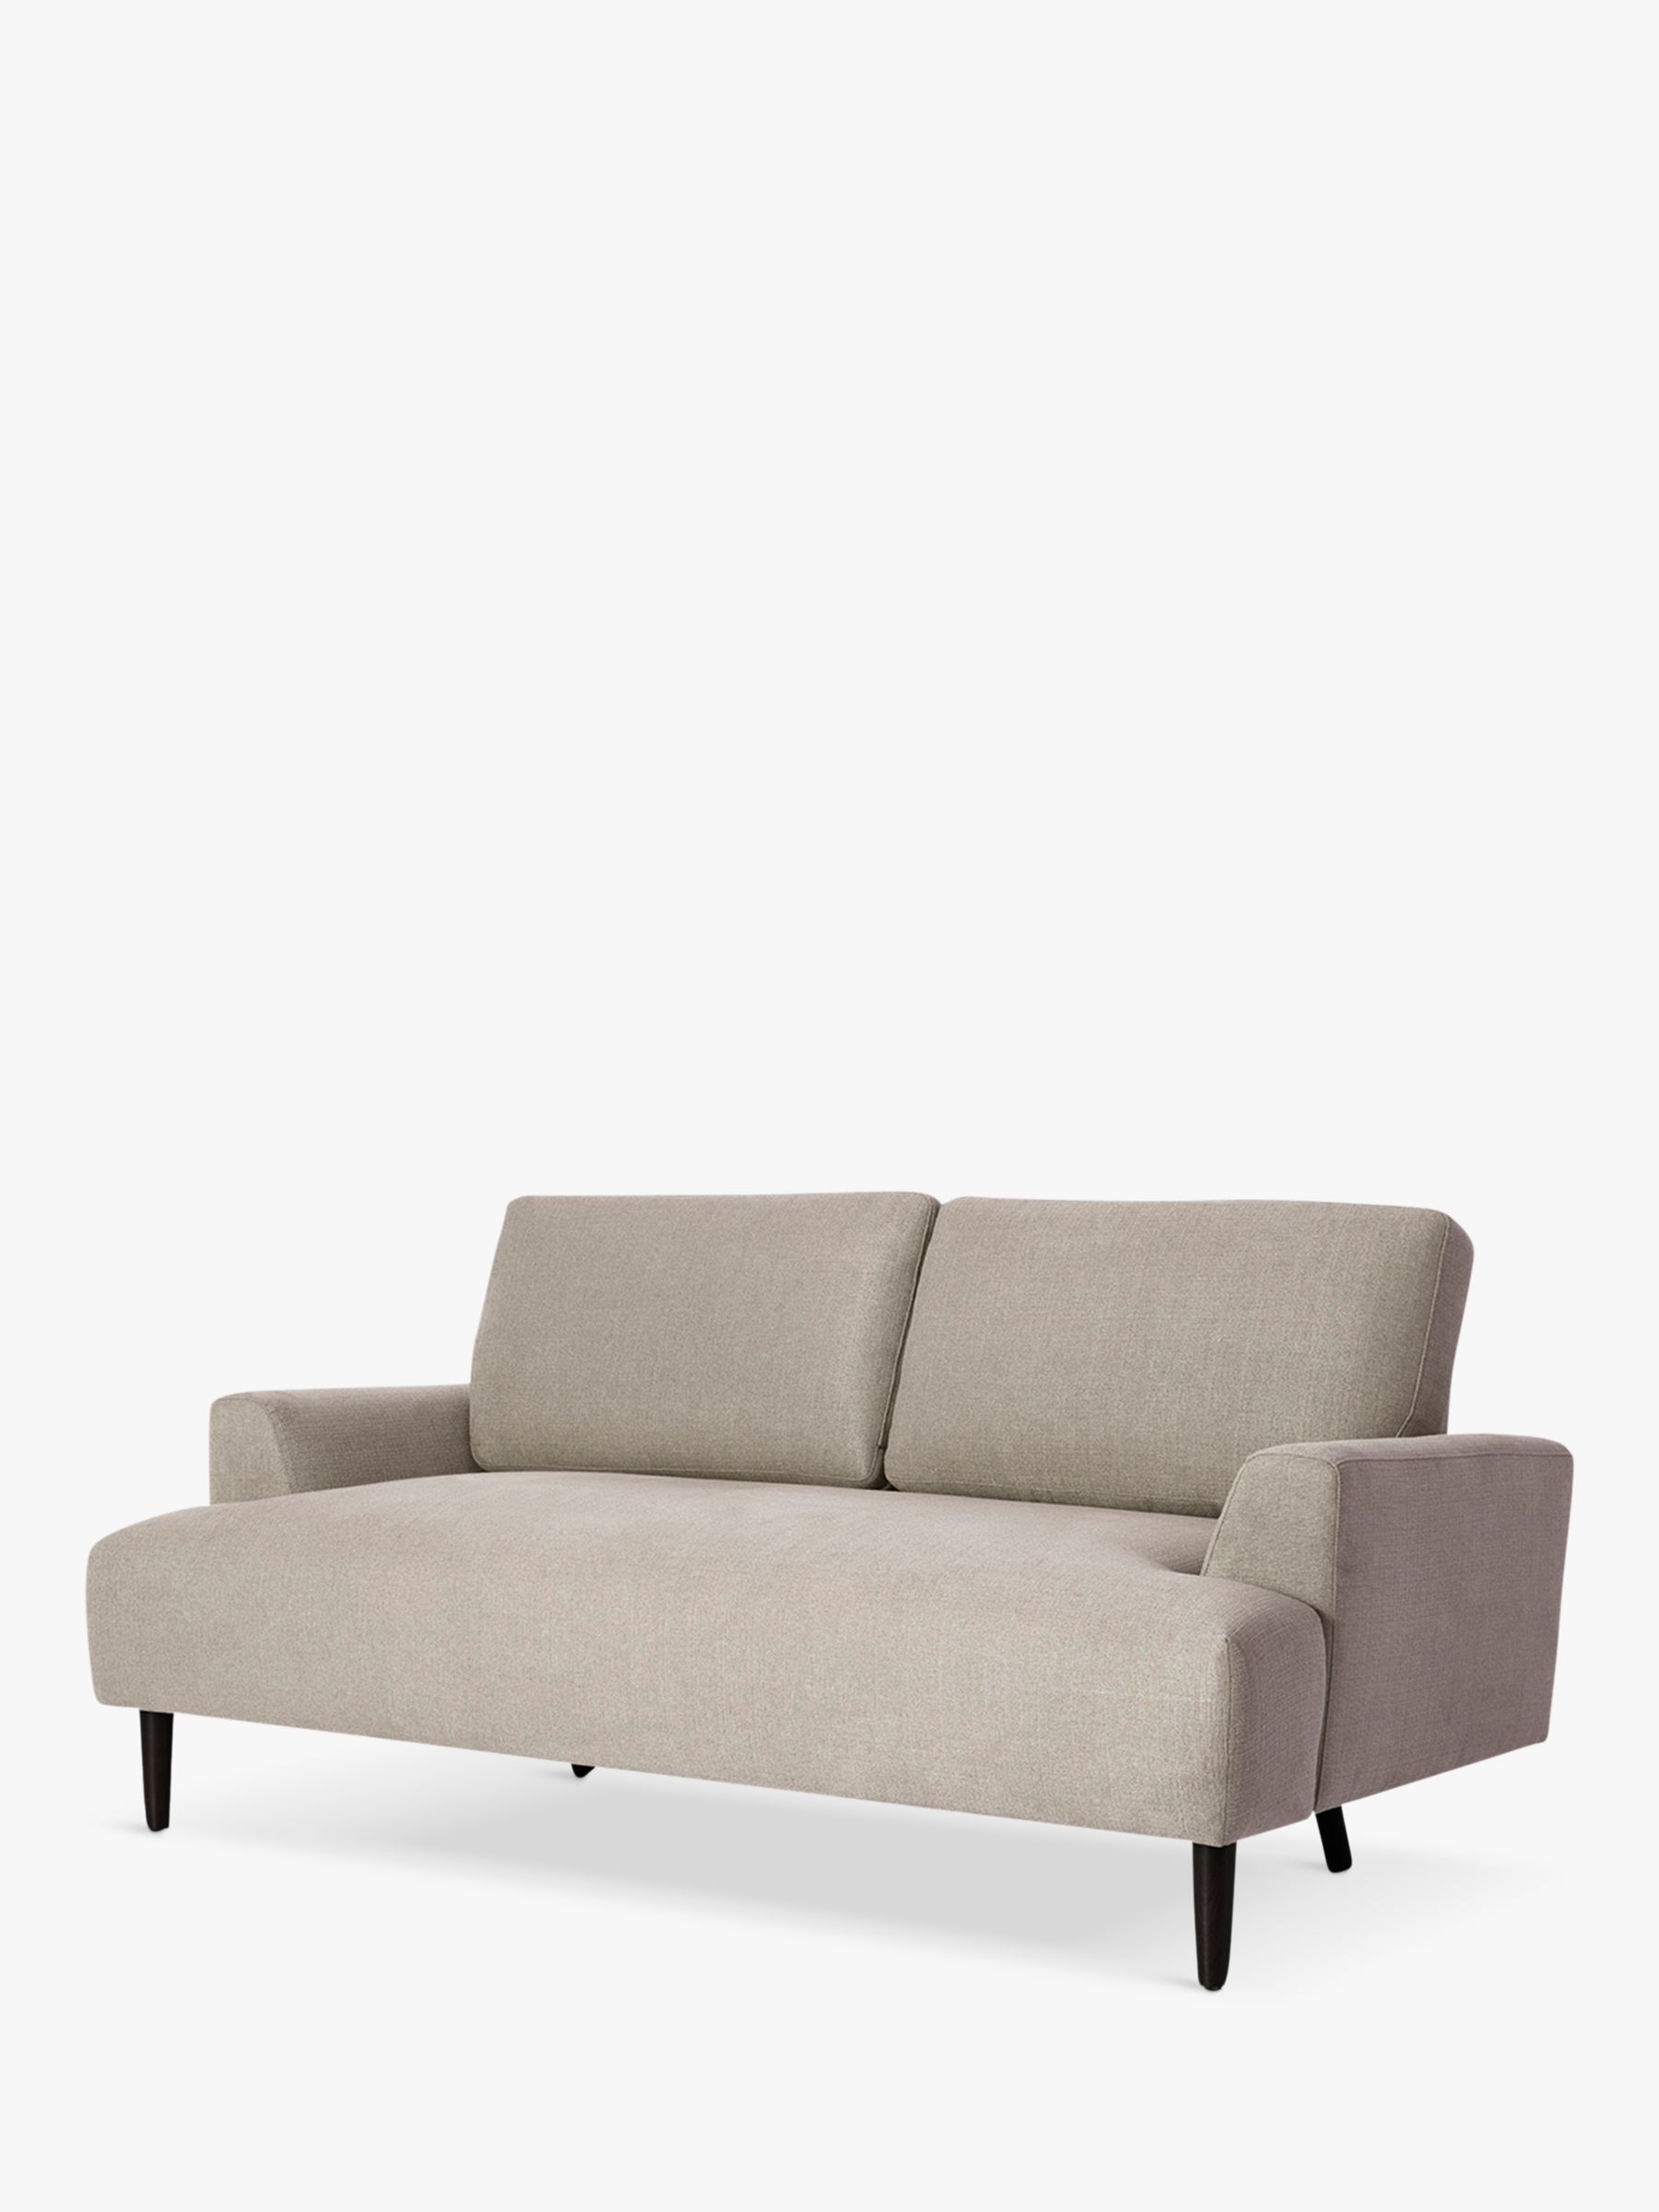 Model 05 Range, Swyft Model 05 Medium 2 Seater Sofa, Linen Pumice